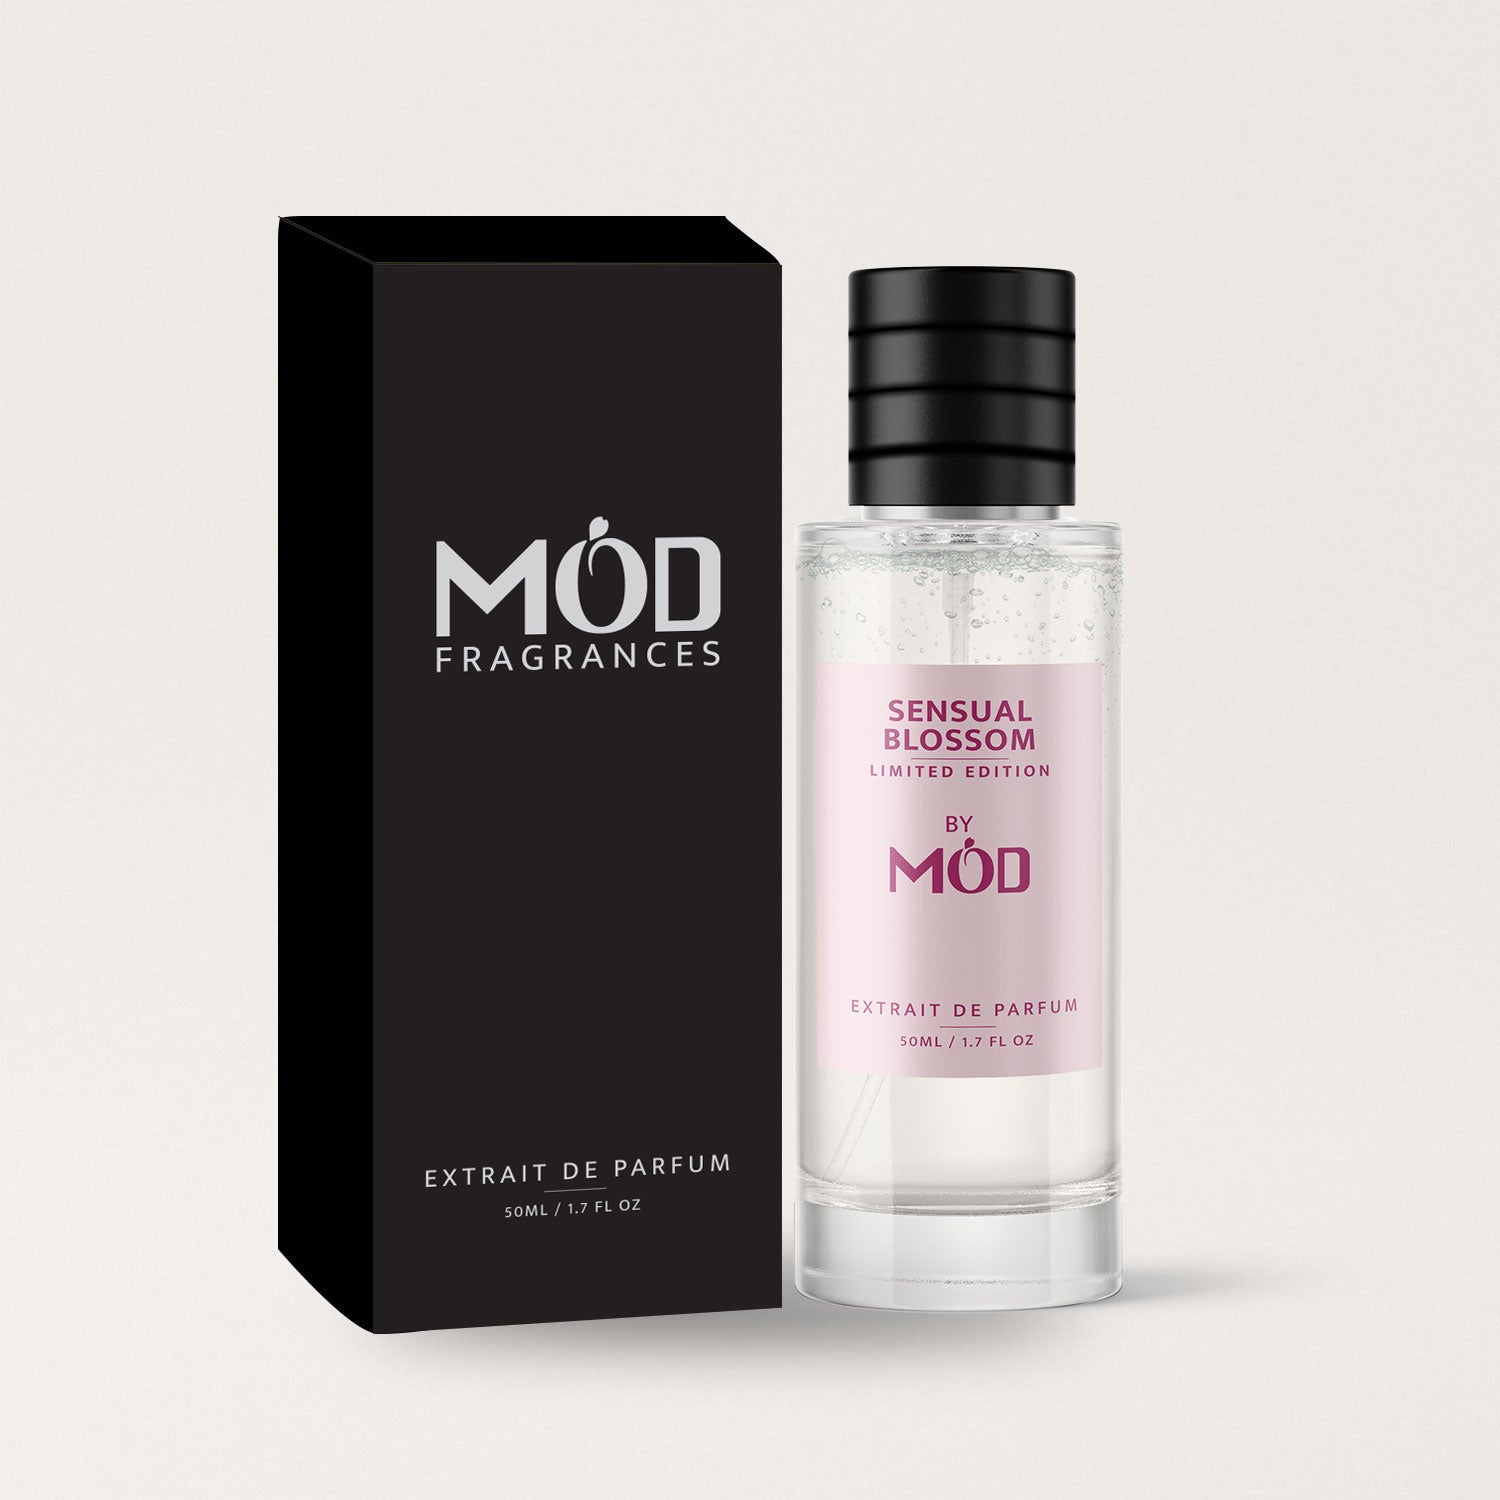 Sensual Blossom - Limited Edition - Mod Fragrances